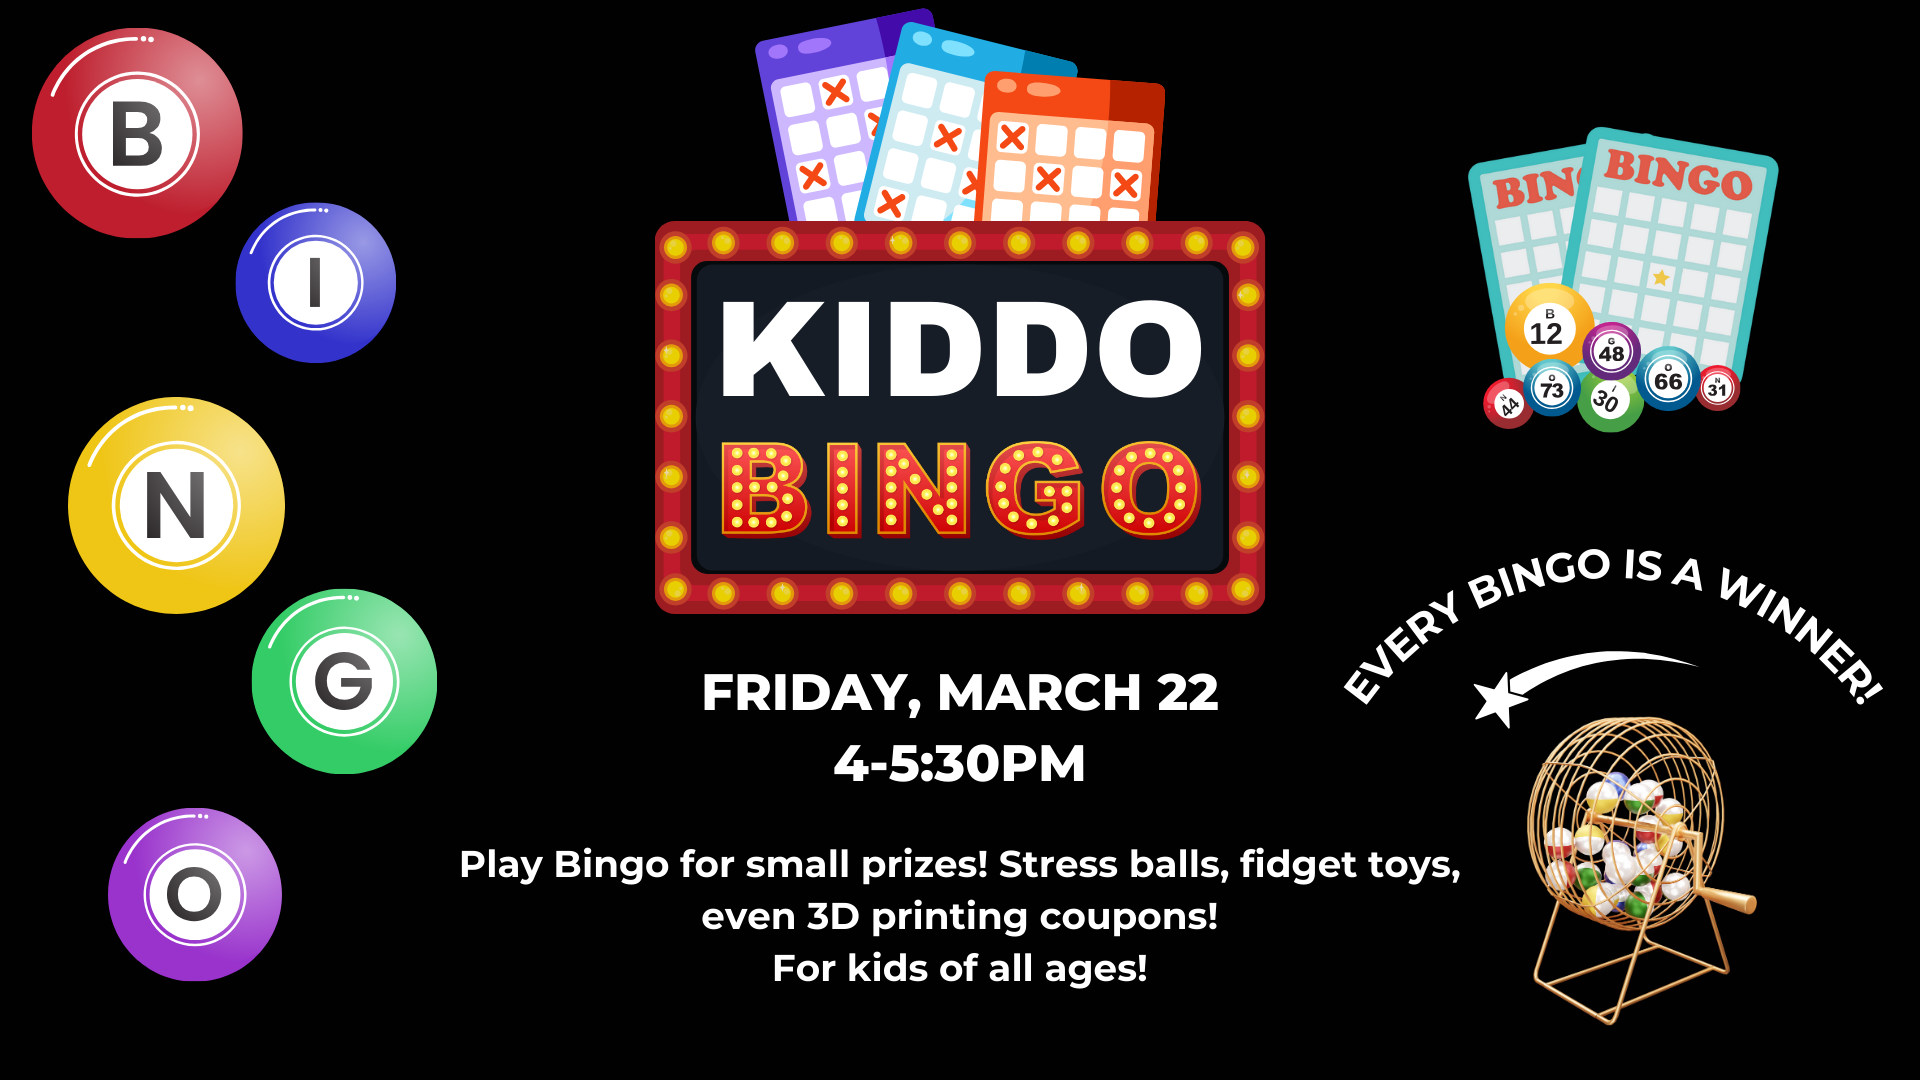 Kiddo Bingo, Friday, March 22 at 4:00 pm